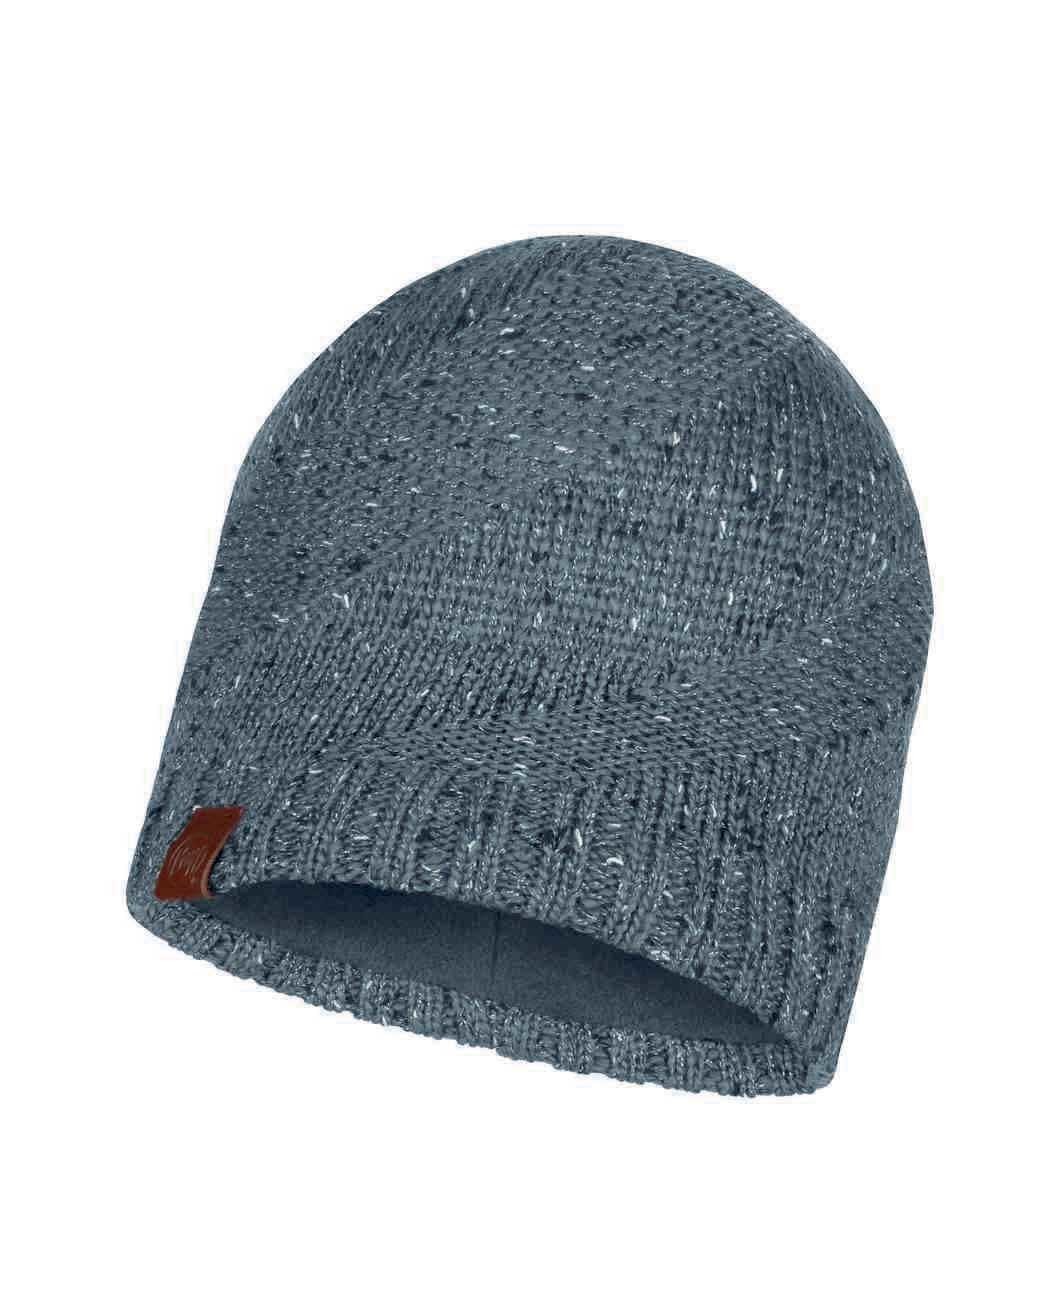 Шапка Buff Knitted&Polar hat arne grey - фото 1